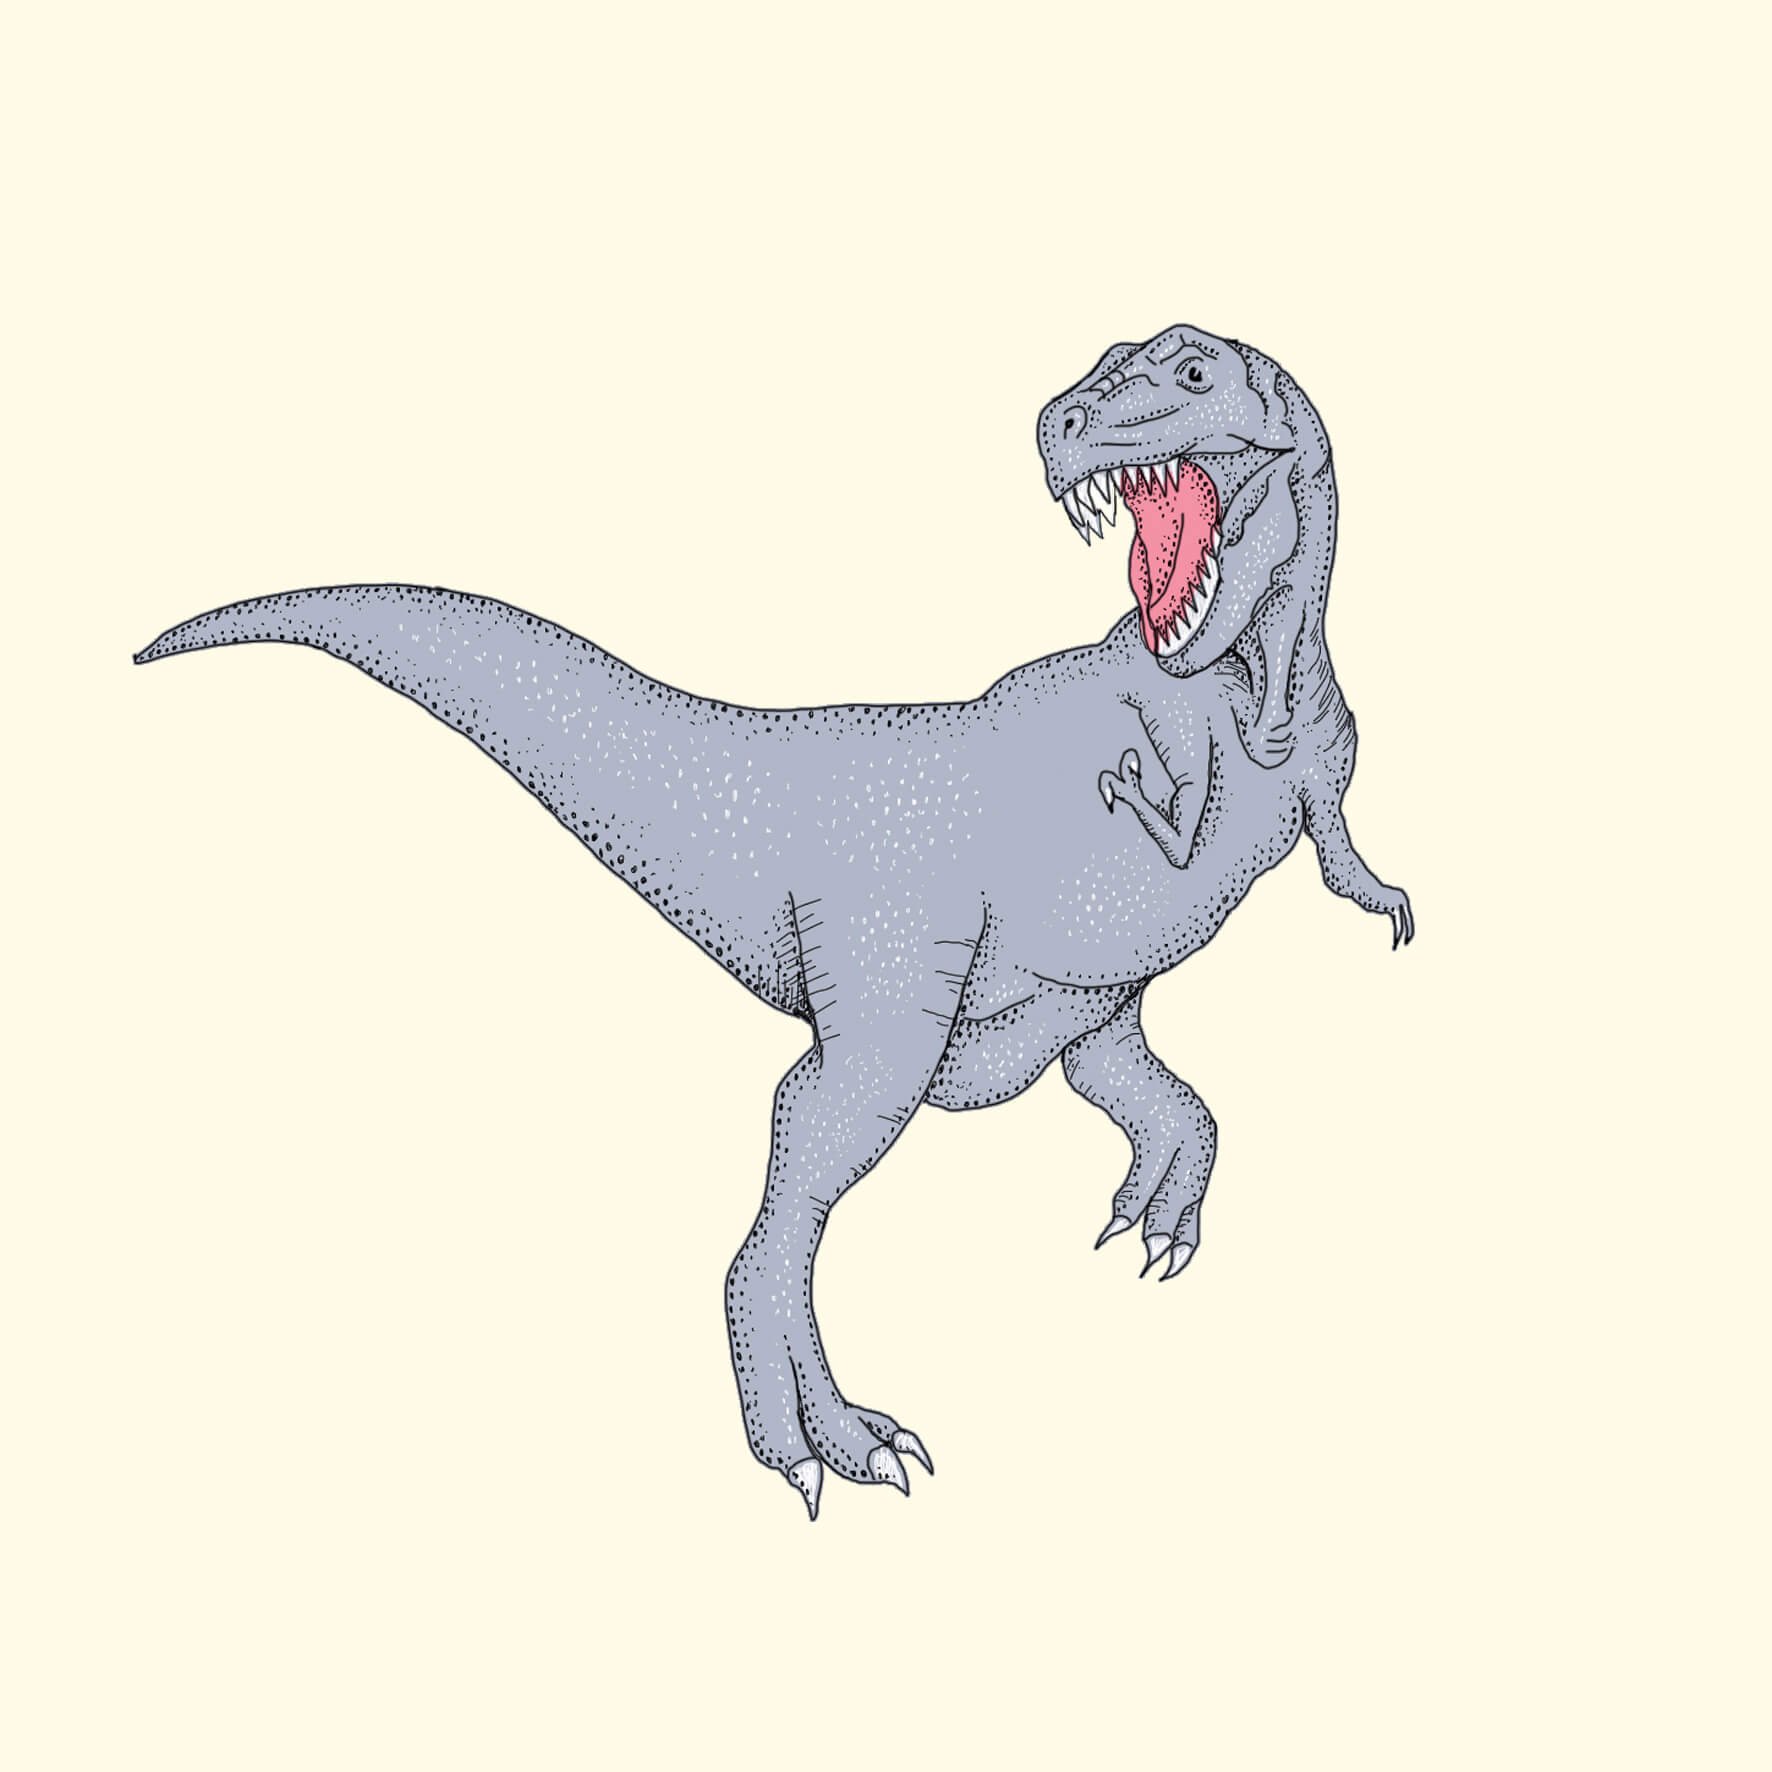 tyranosaurus rex dinosaur illustration.jpg